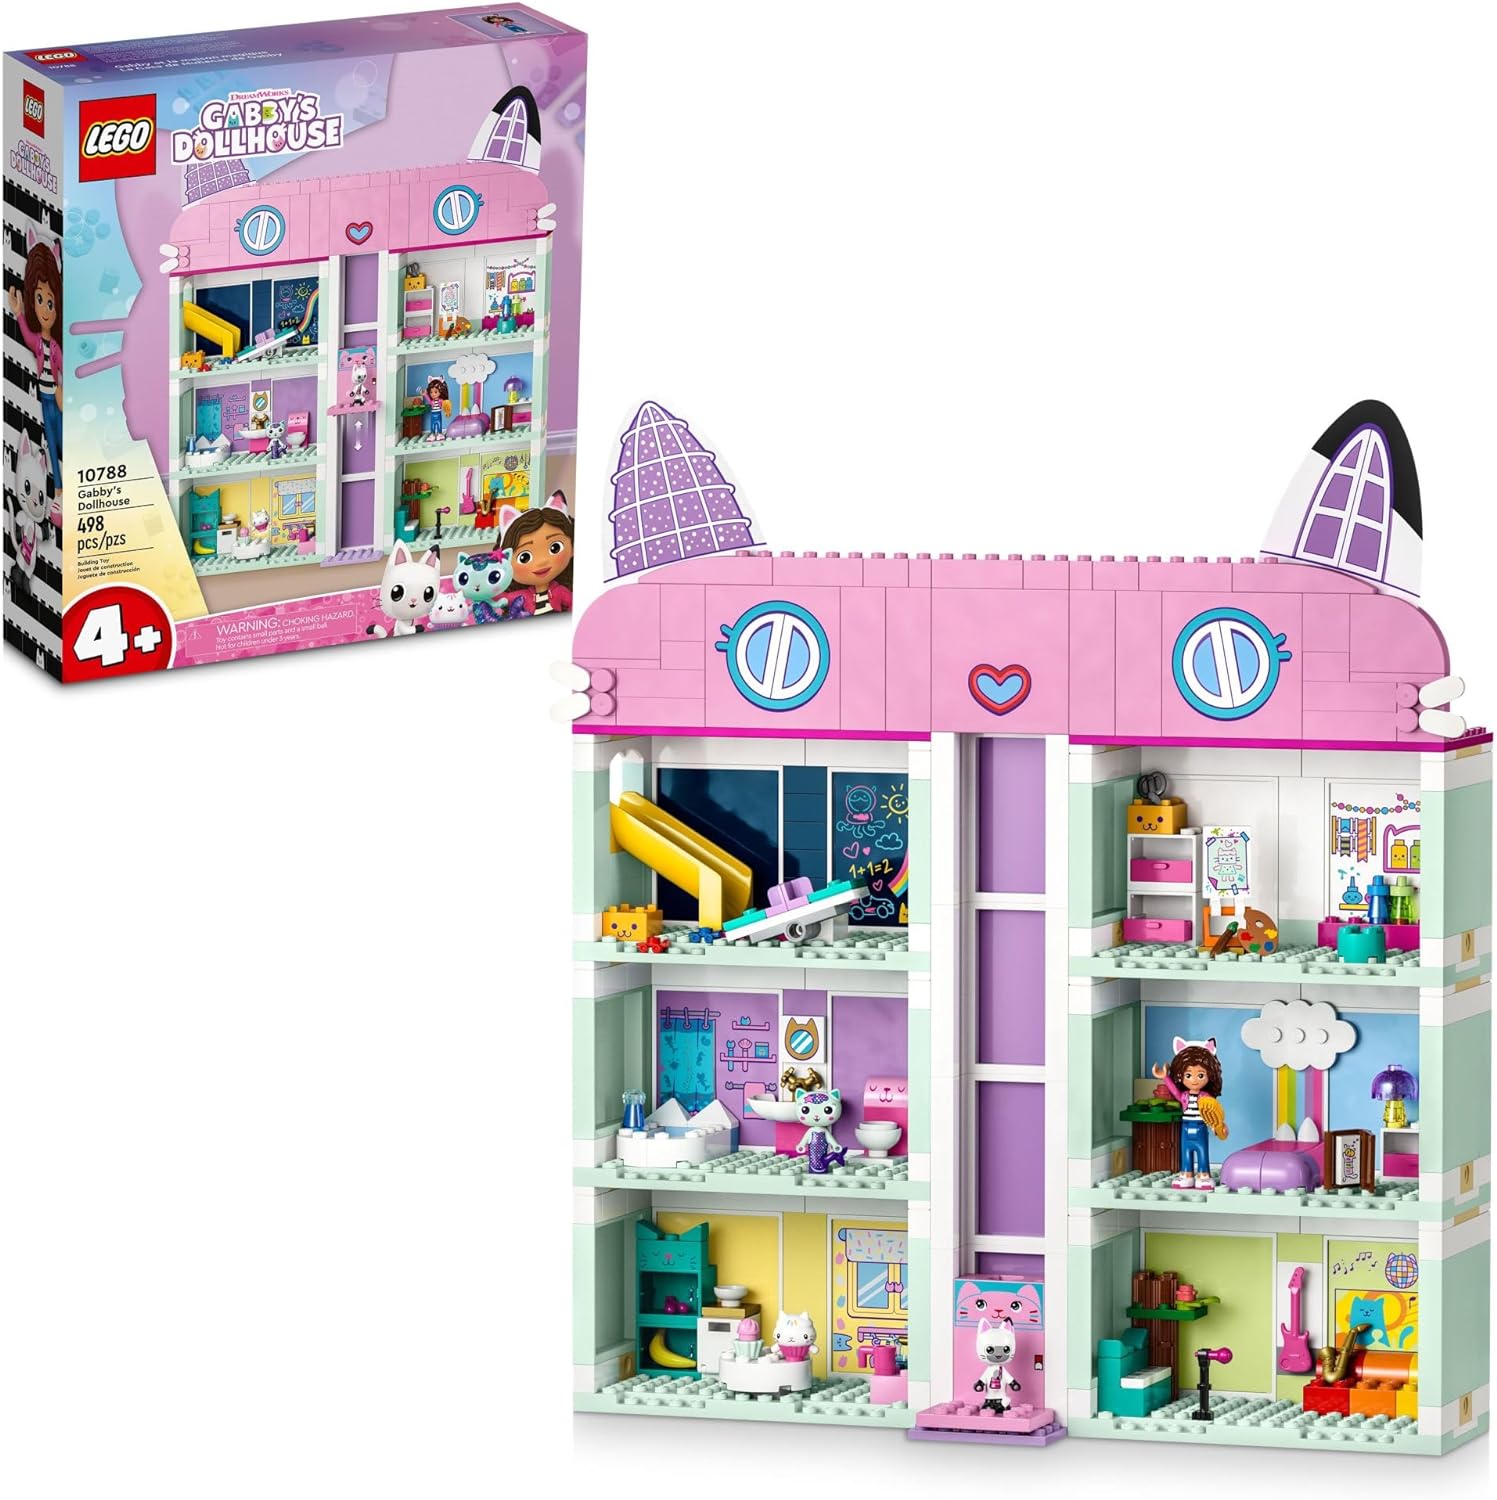 LEGO 10788 DreamWorks - Gabby's Dollhouse